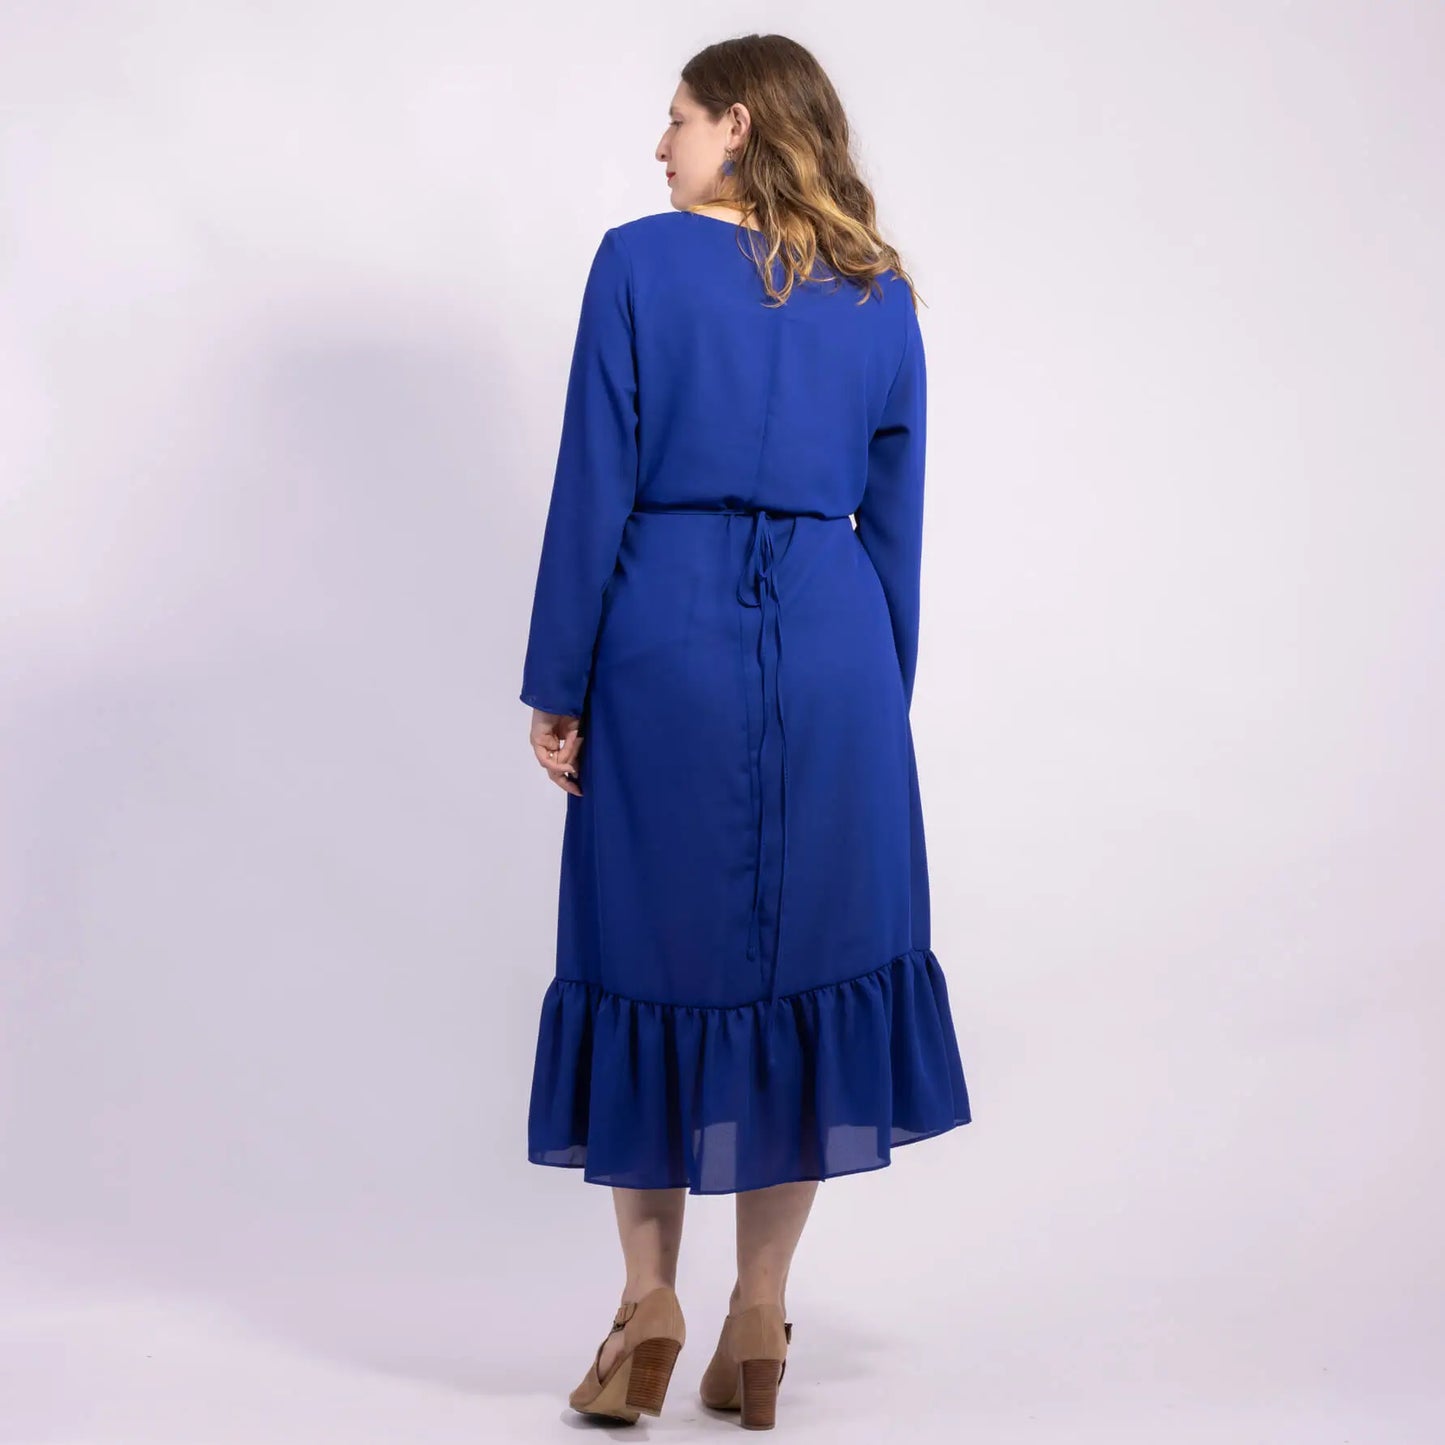 blue kiwi designer dress with frill hem